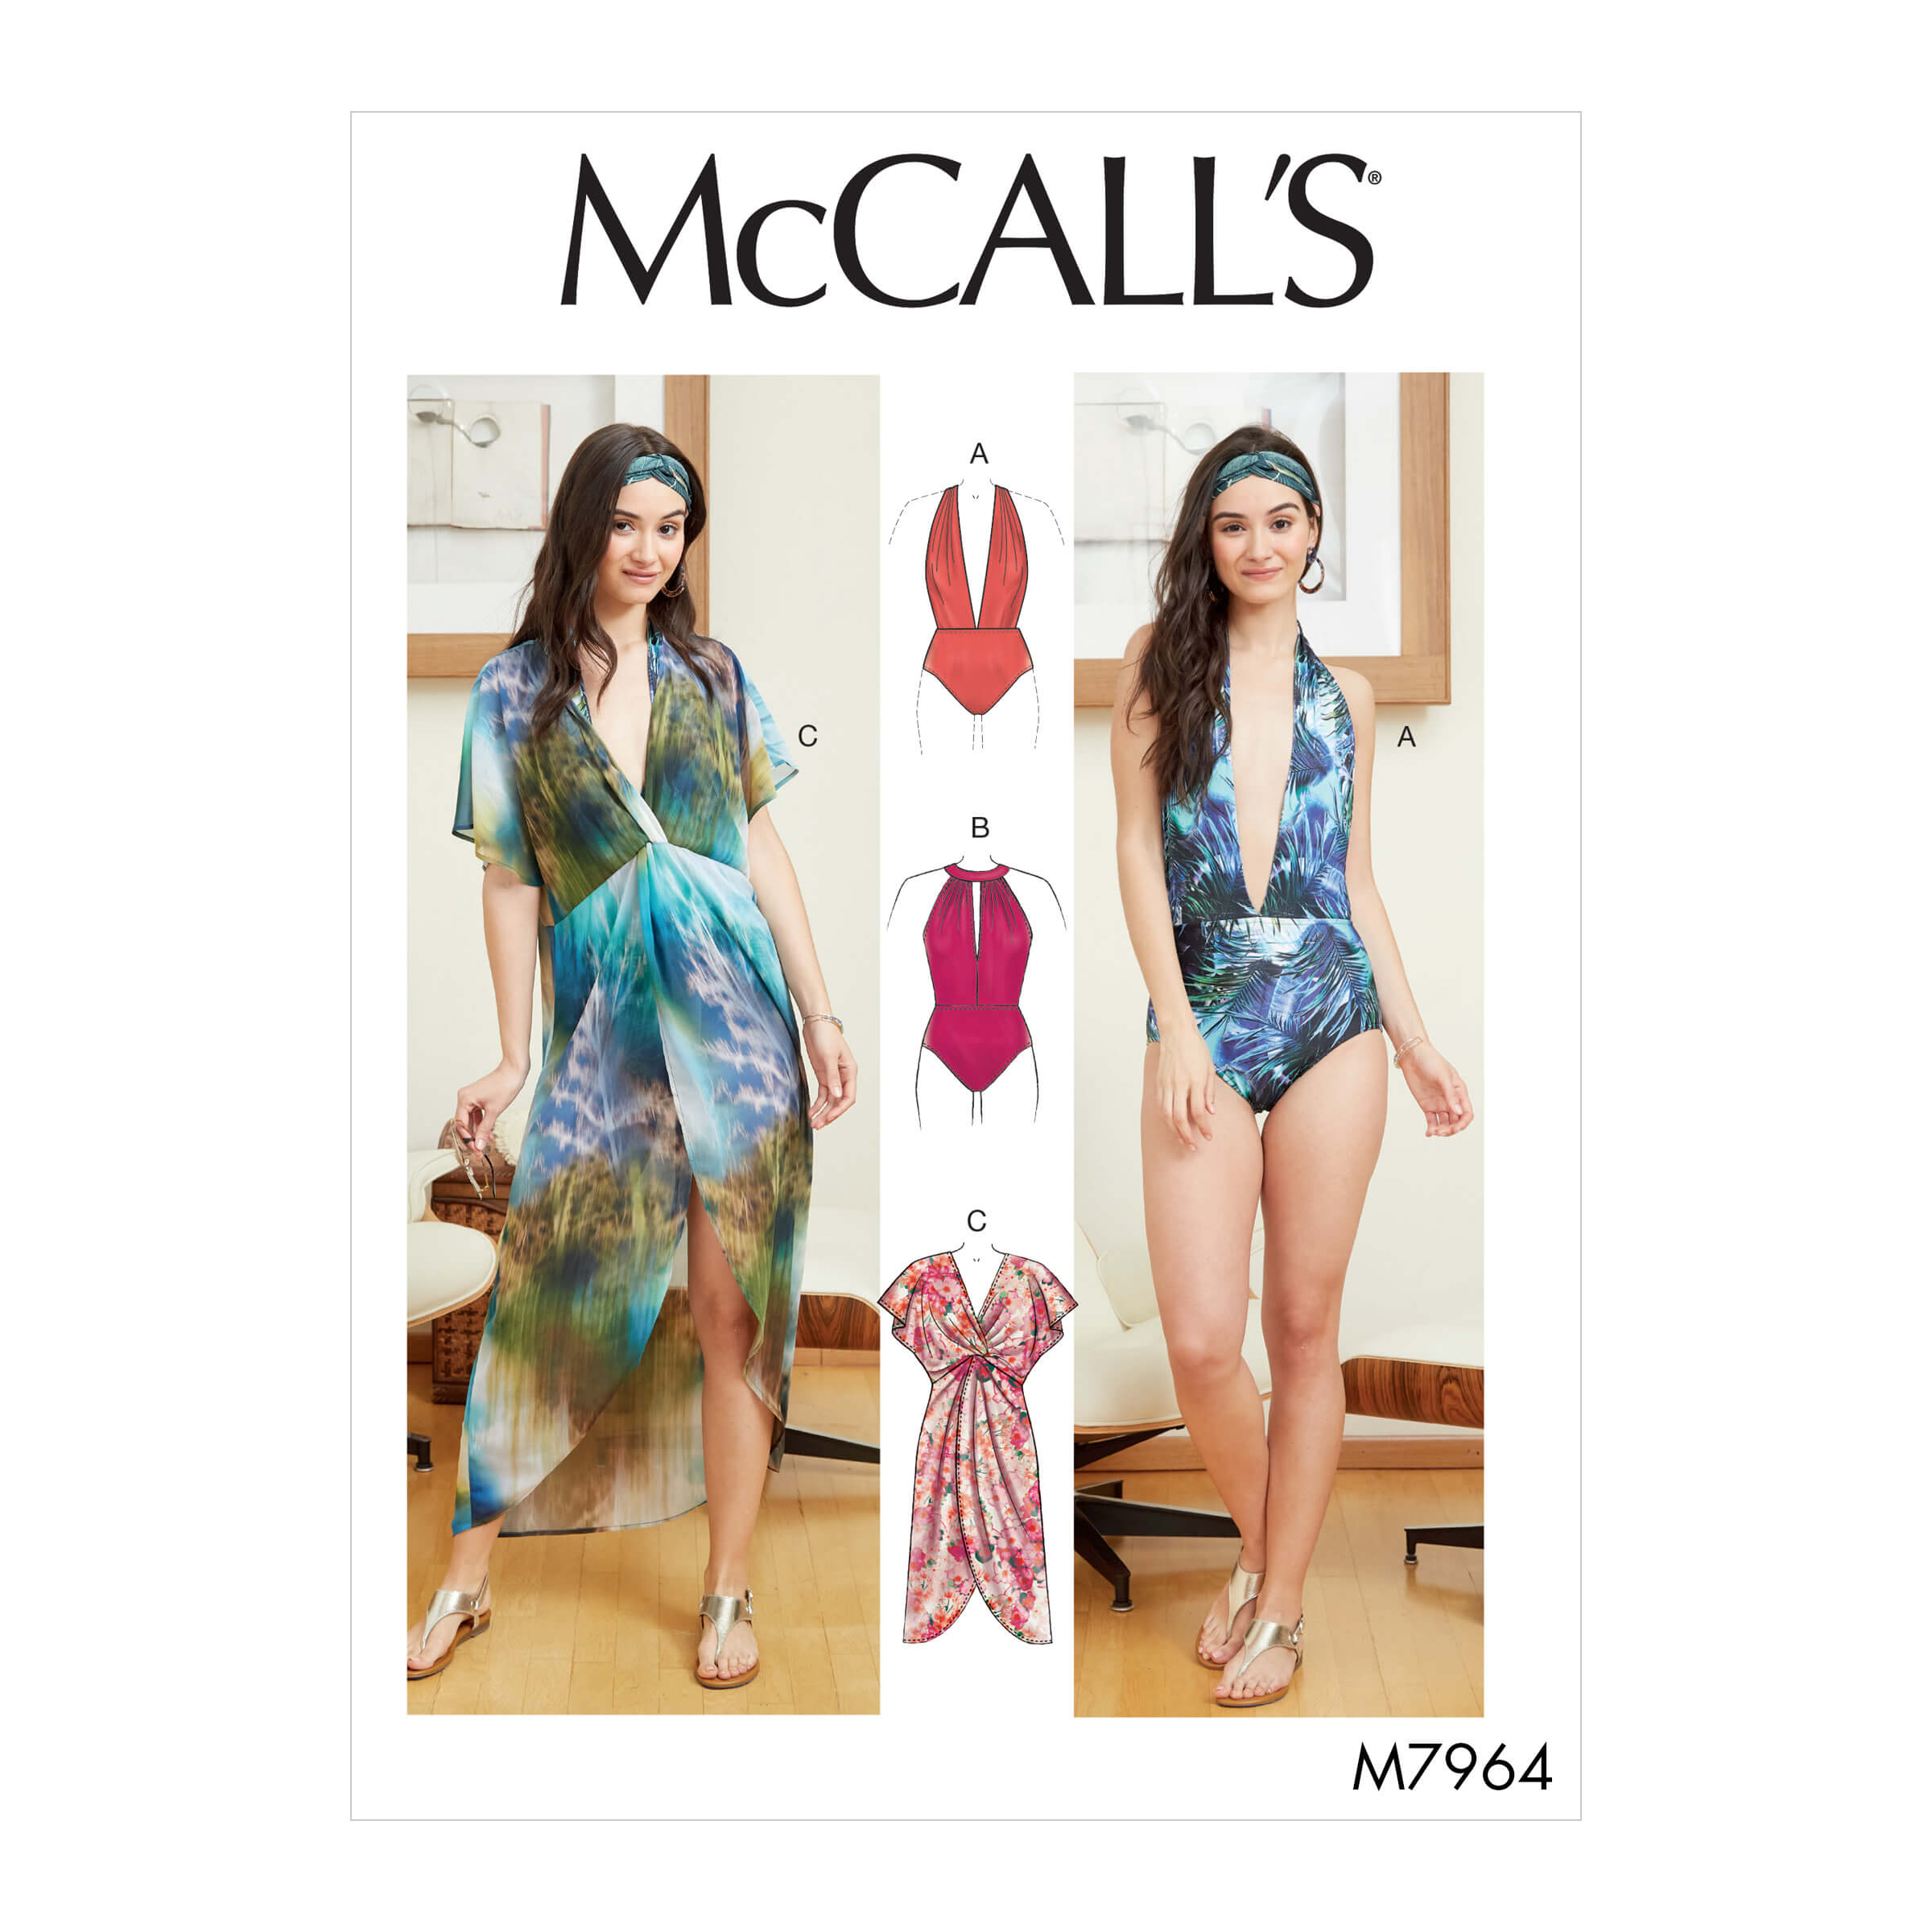 McCall's Sewing Pattern M7964 Misses' Sportswear